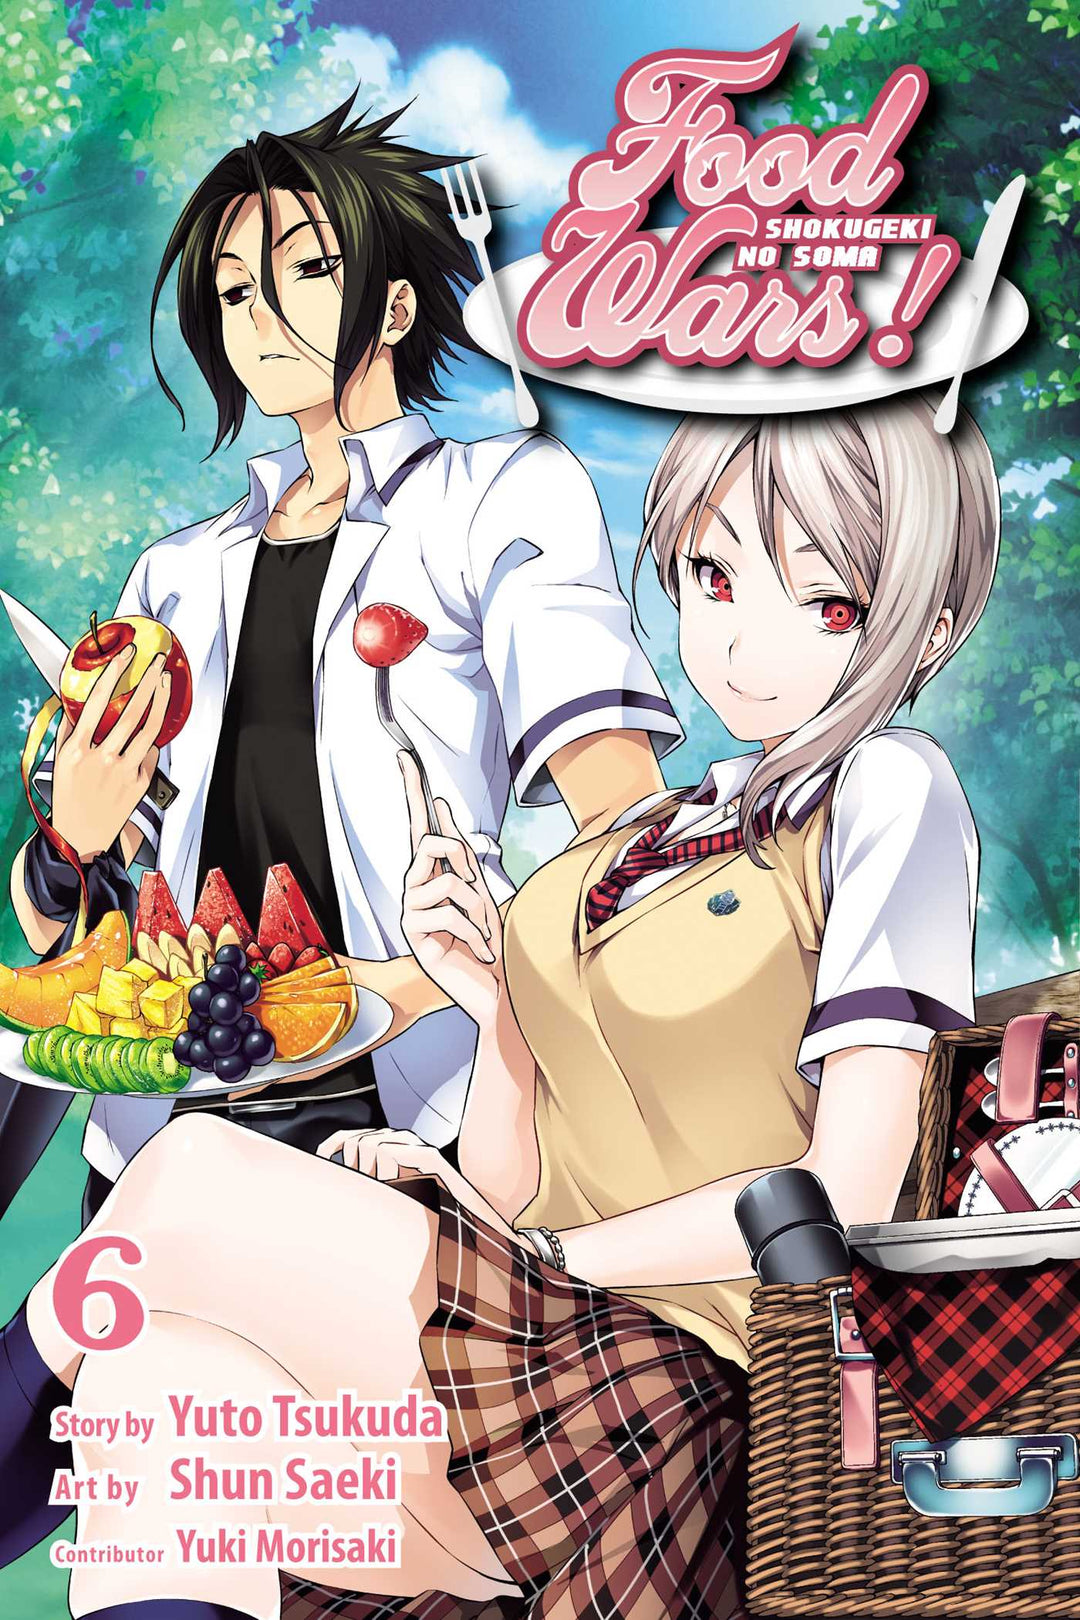 Food Wars!: Shokugeki no Soma, Vol. 06 - Manga Mate